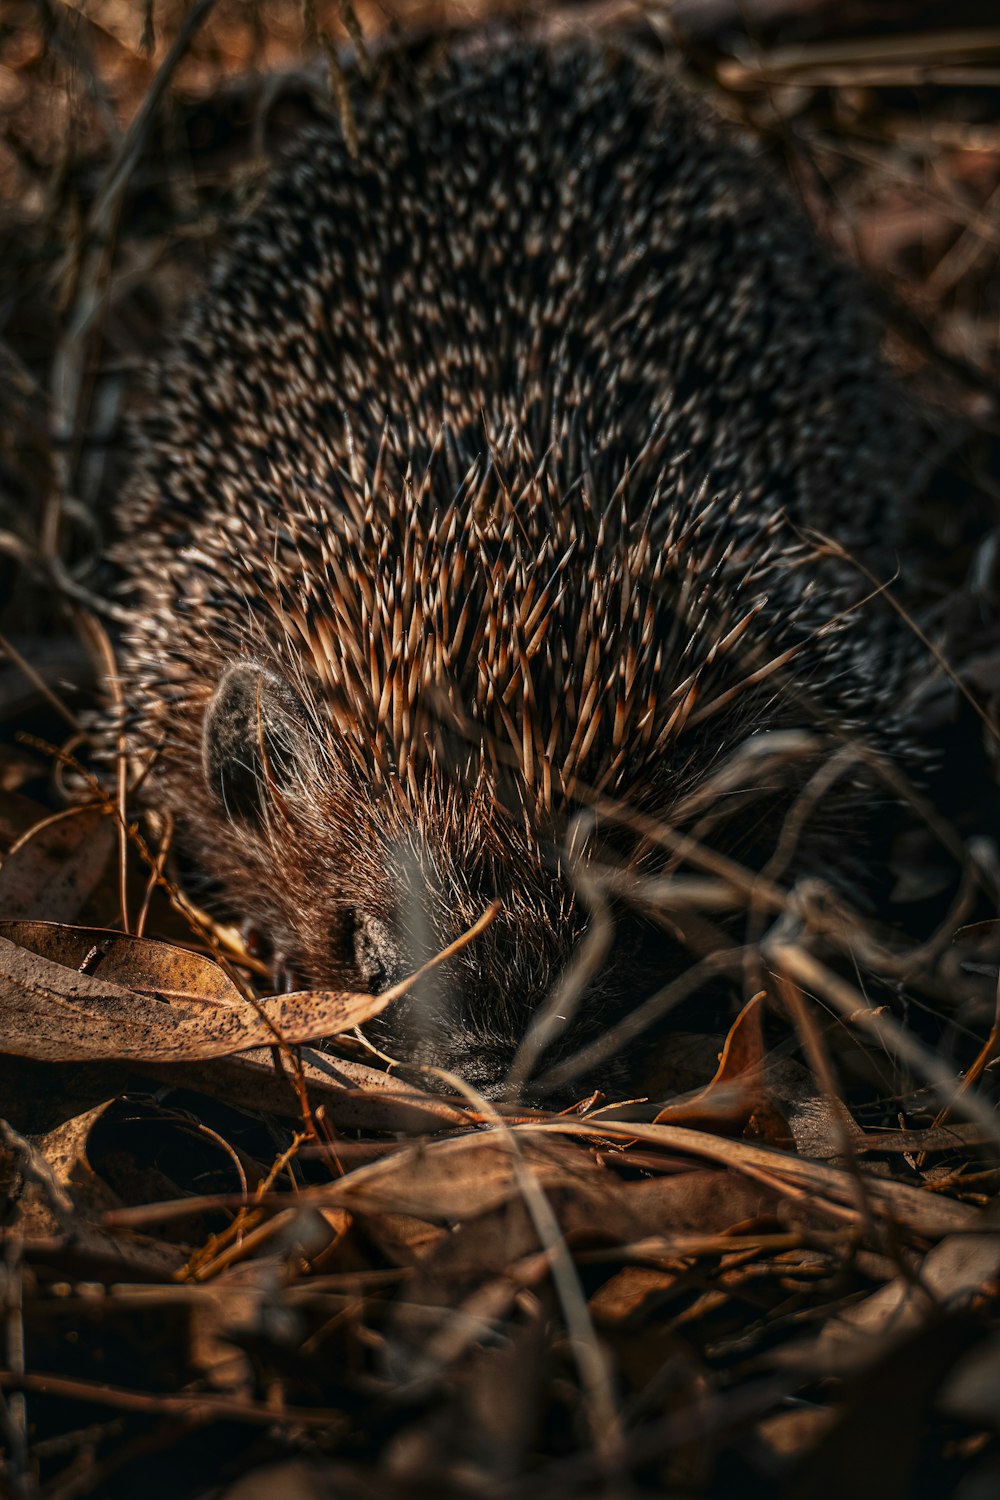 a hedgehog walking through a field of dry grass